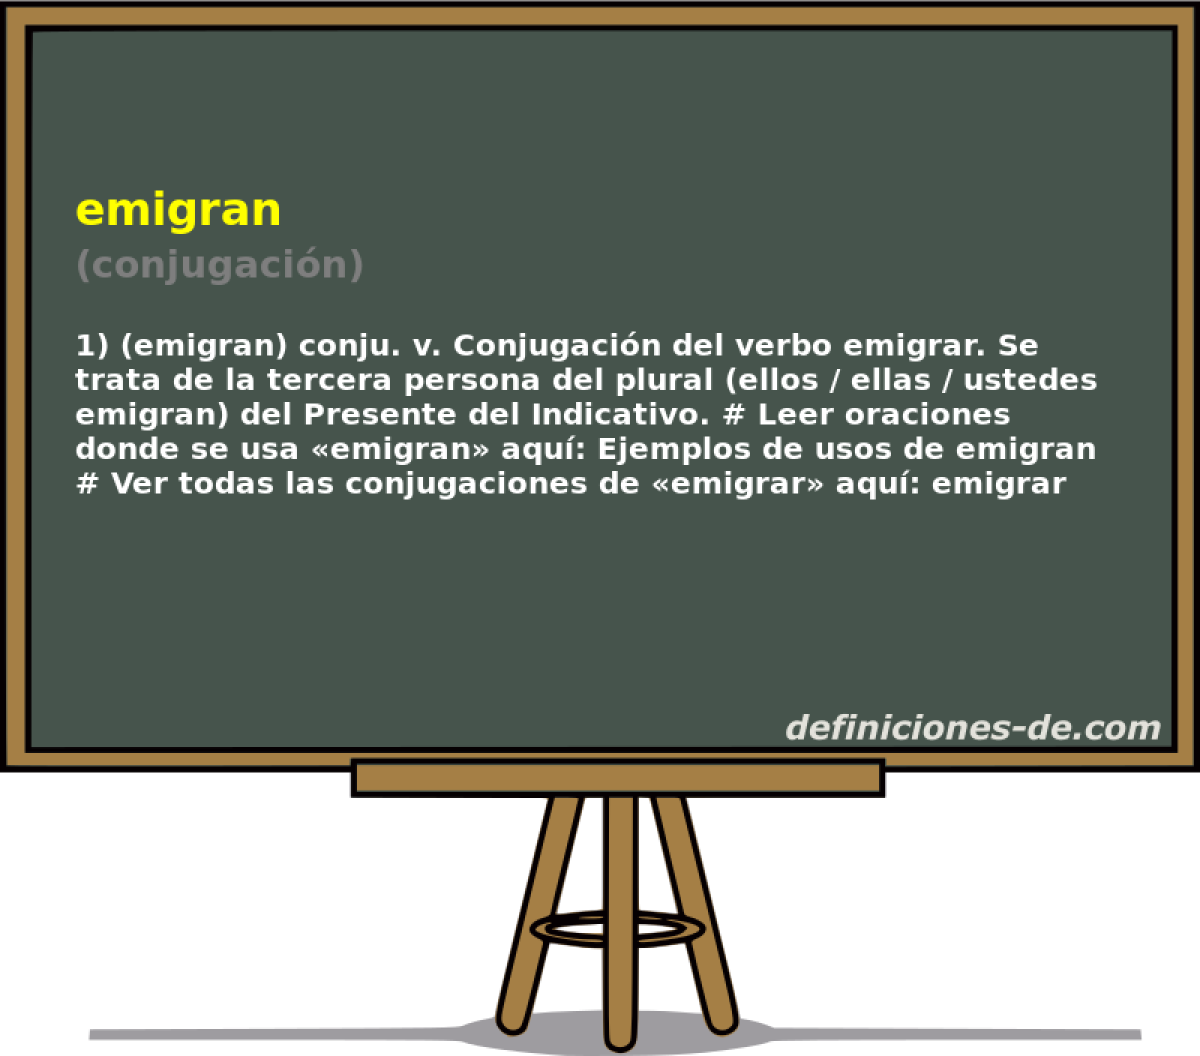 emigran (conjugacin)